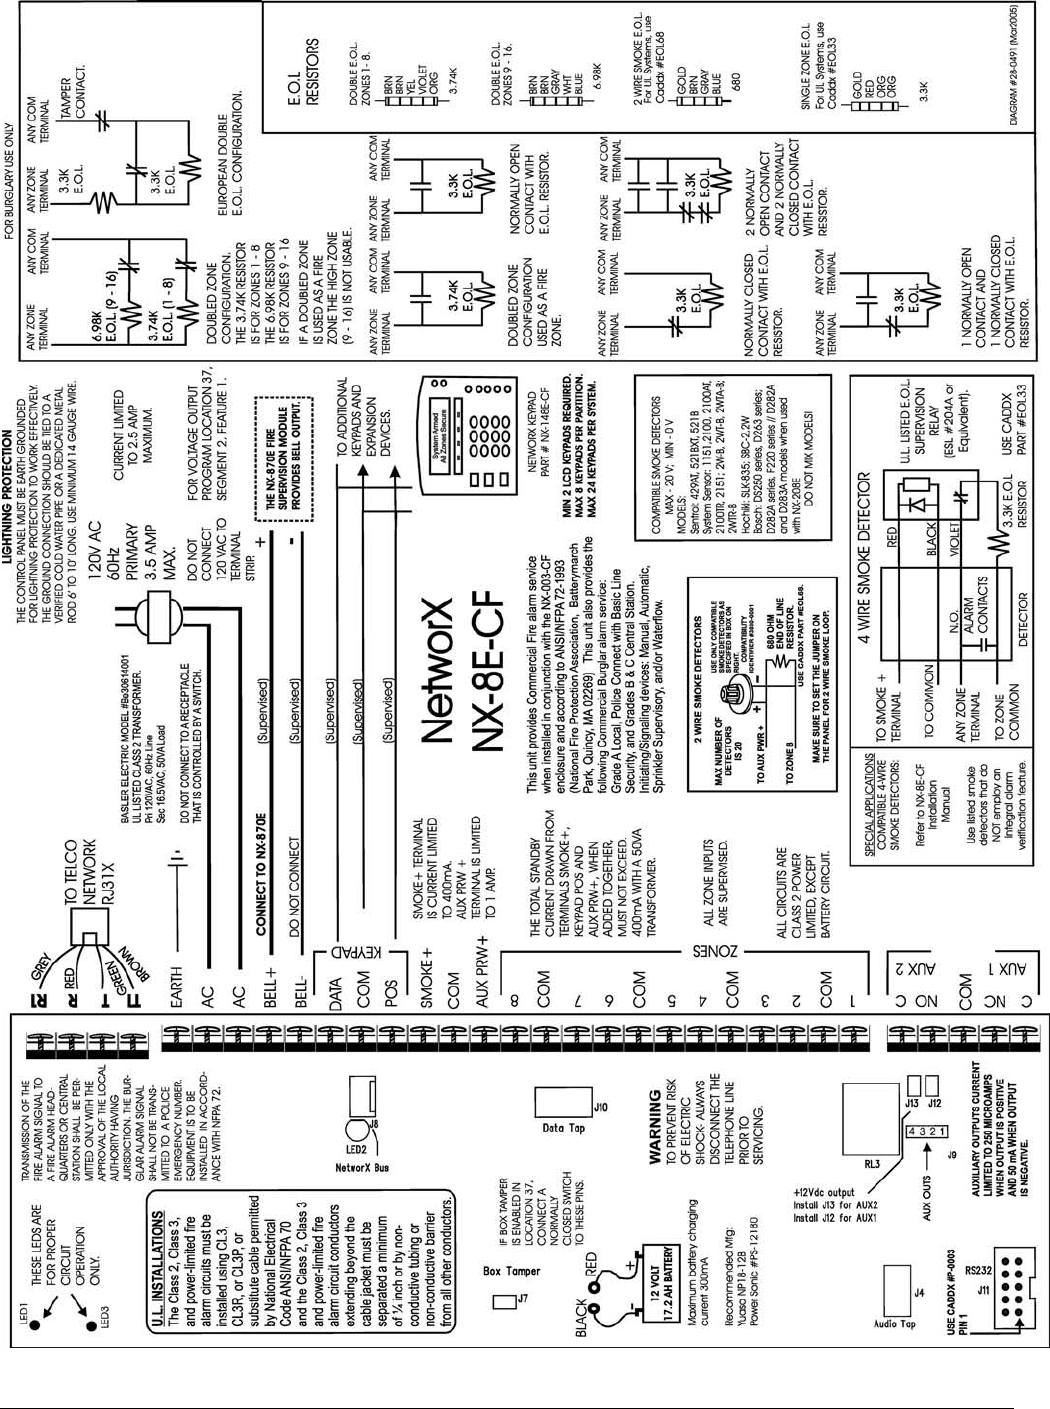 InterLogix Nx8Ecfib05 NX 8E CF CONTROL PANEL User Manual  Networx Nx 4 Wiring Diagram    UserManual.wiki